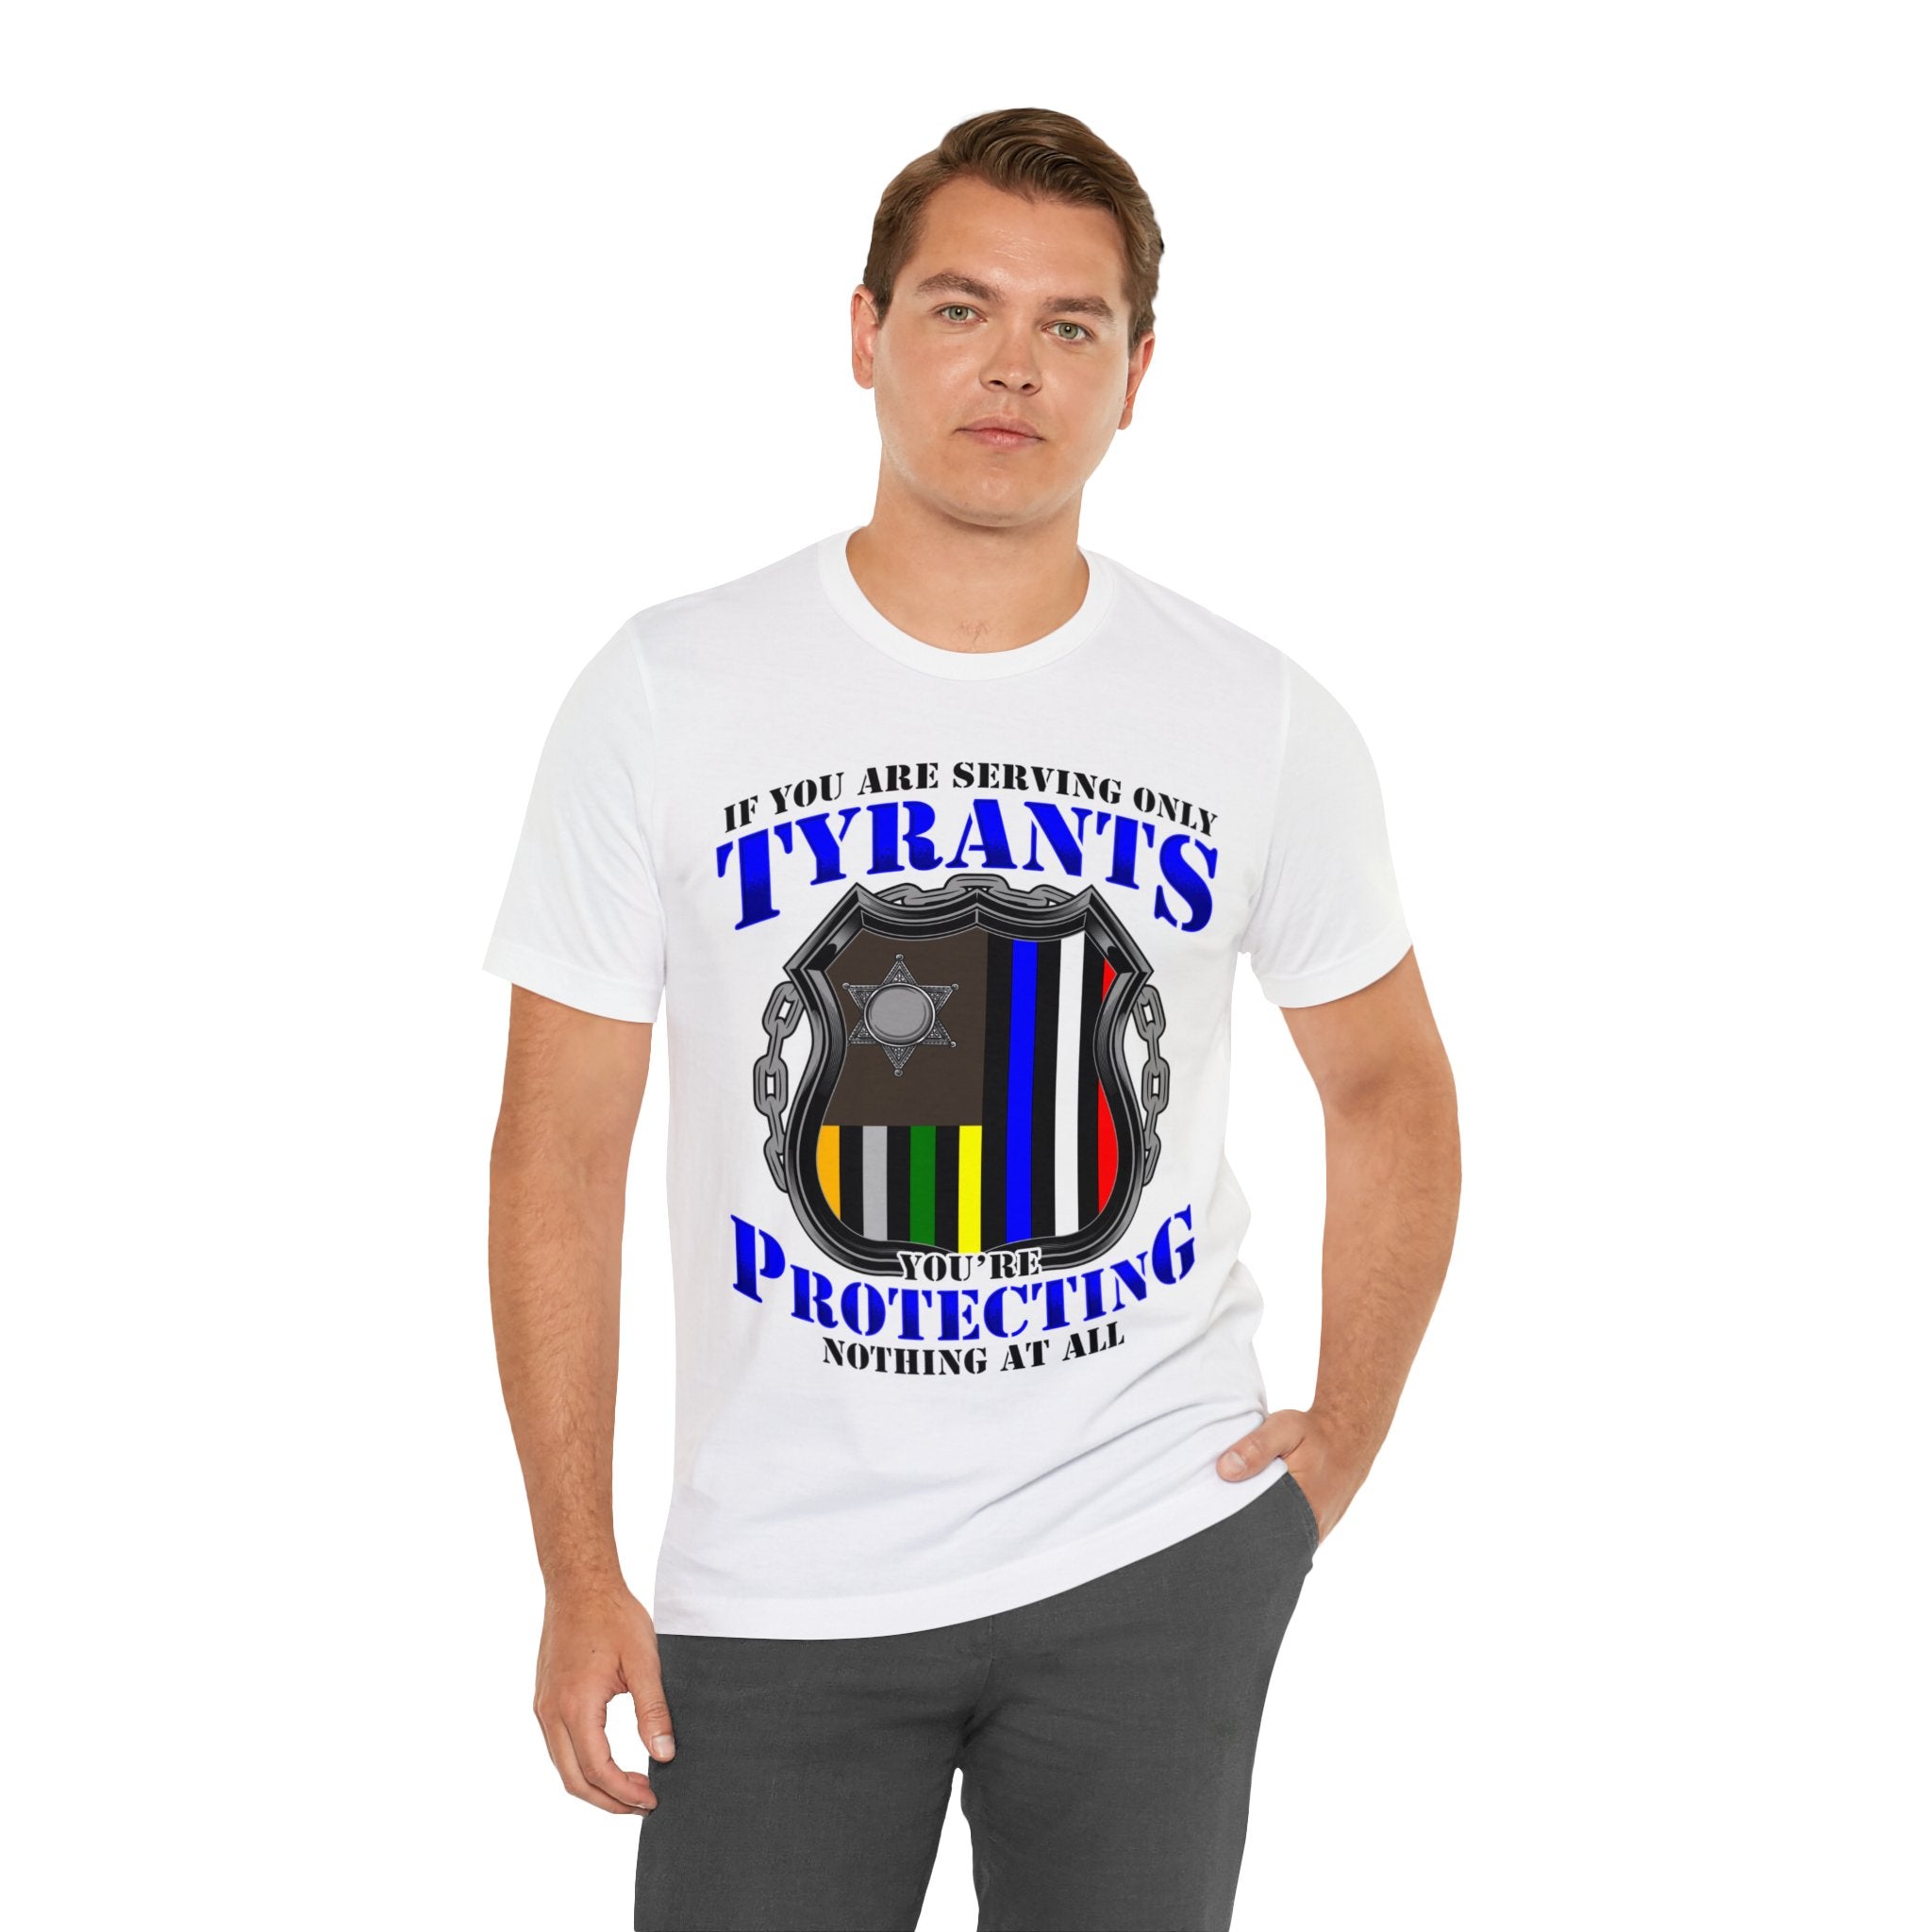 Thin Police Line Tee - Tyrants/Protecting